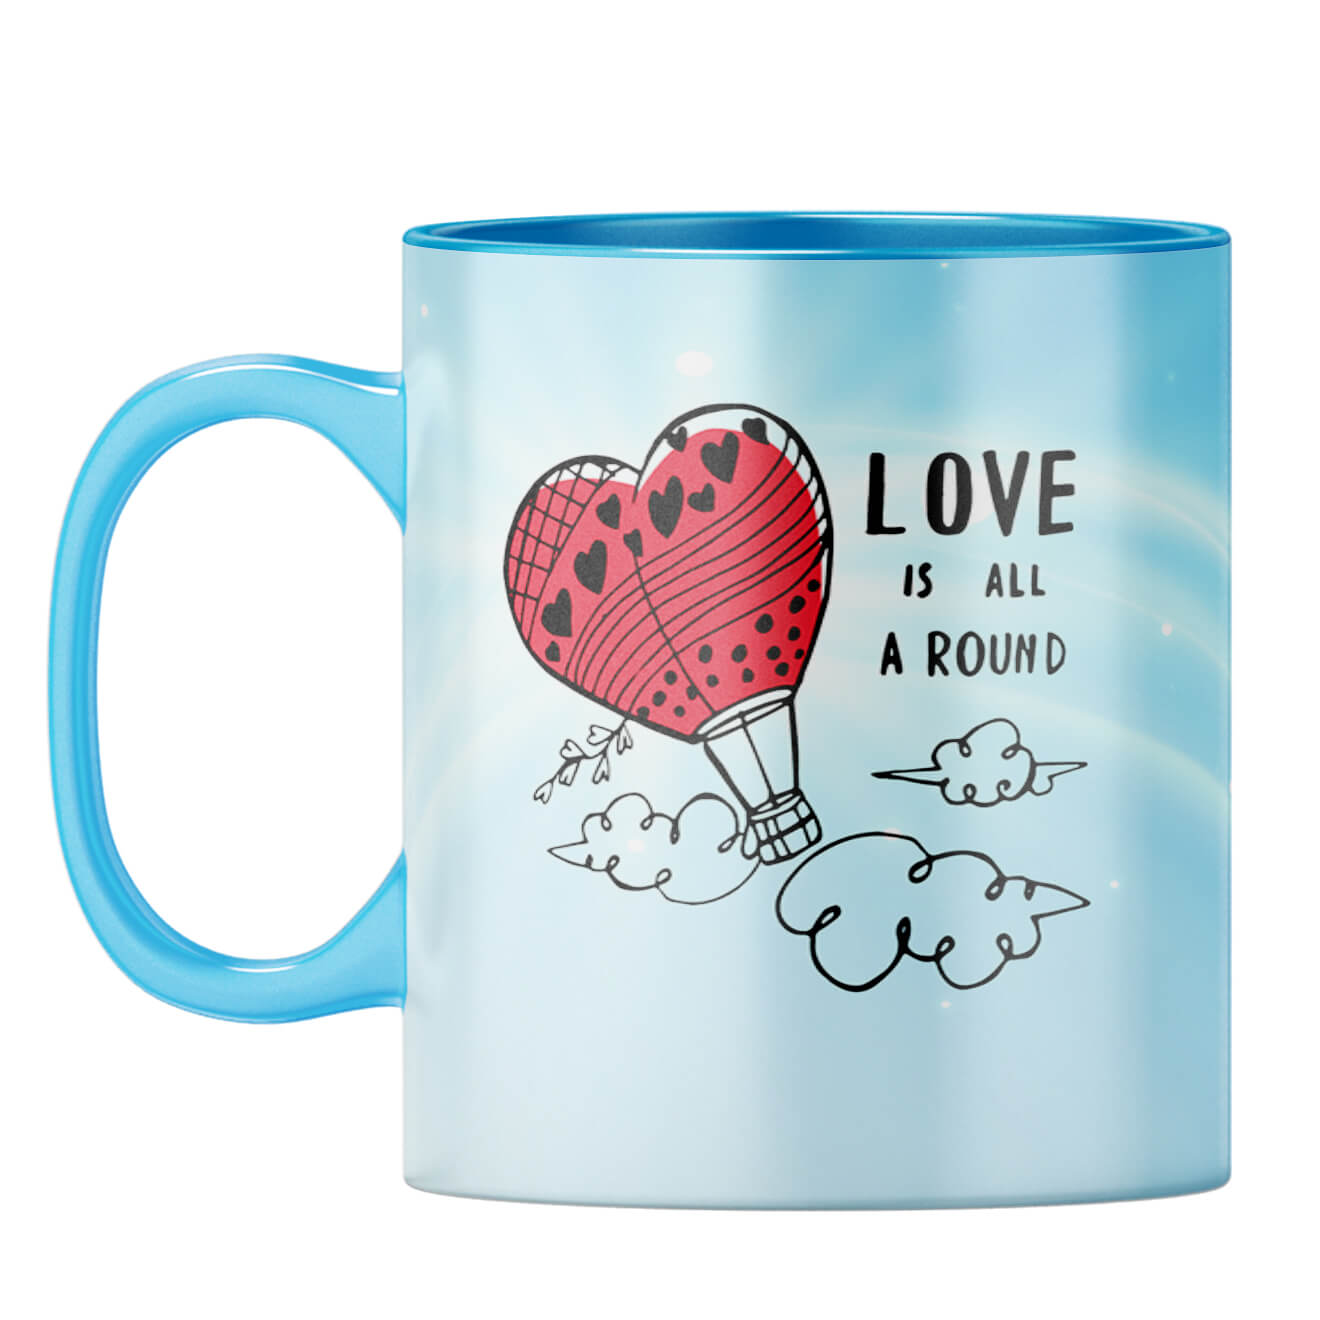 Love is all around Coffee Mug Light Blue